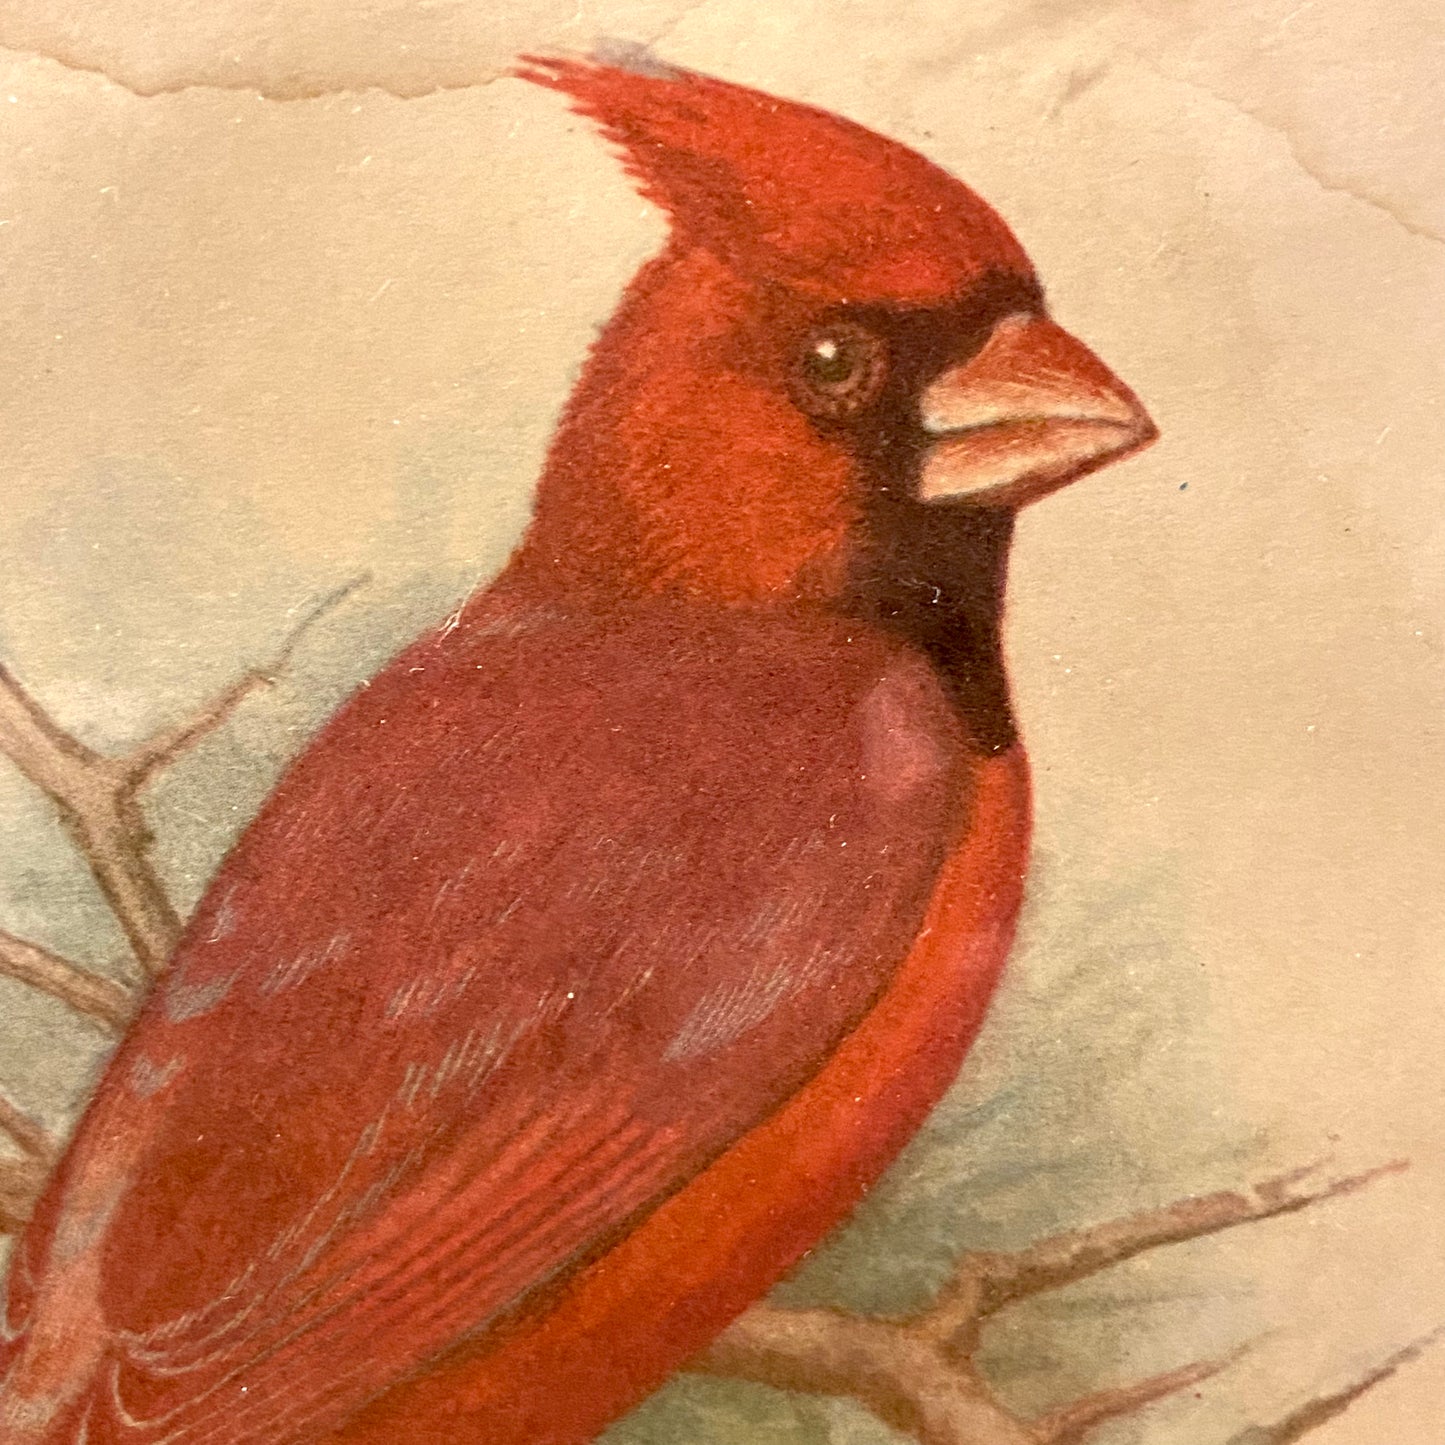 Pair of vintage Audubon bird color lithograph wall art